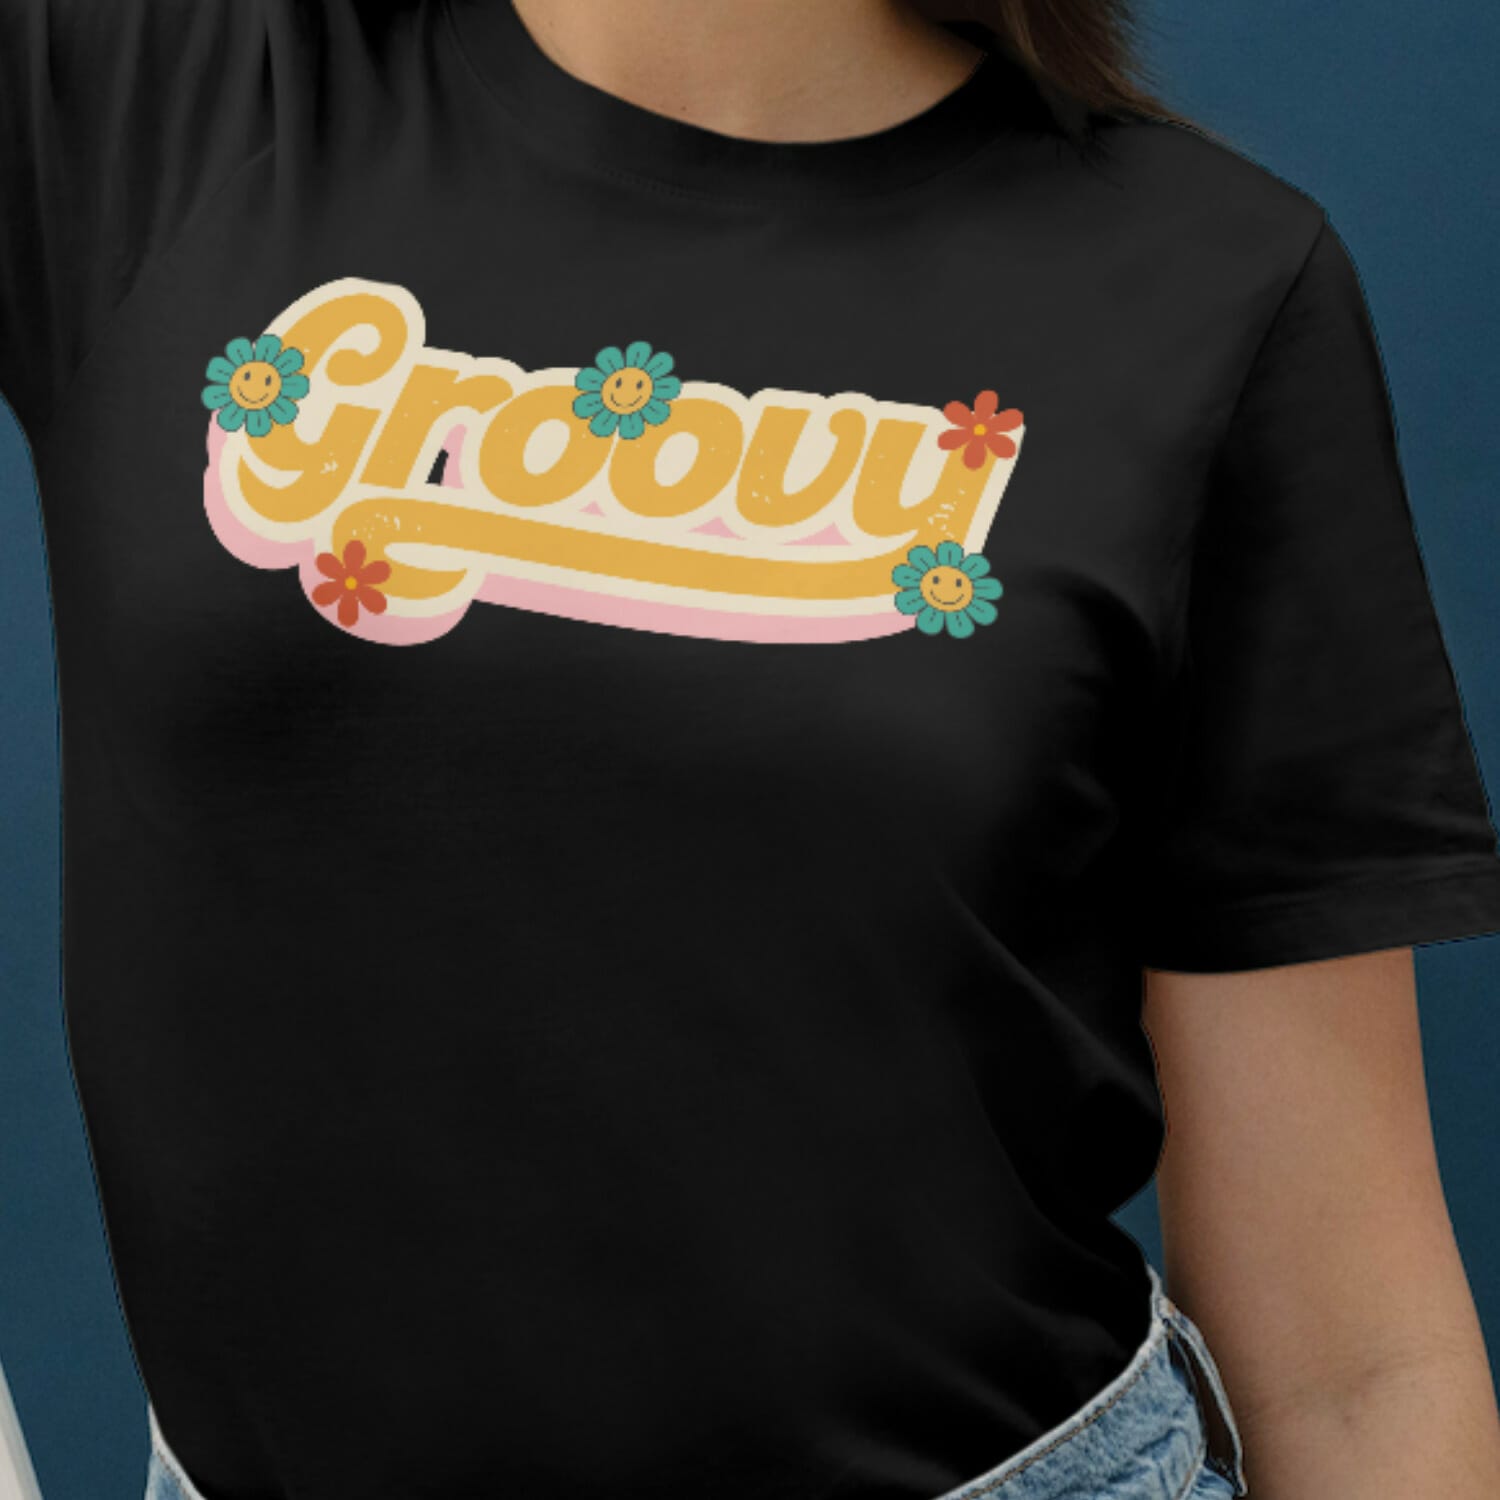 Groovy Text Effect Free T Shirt Design